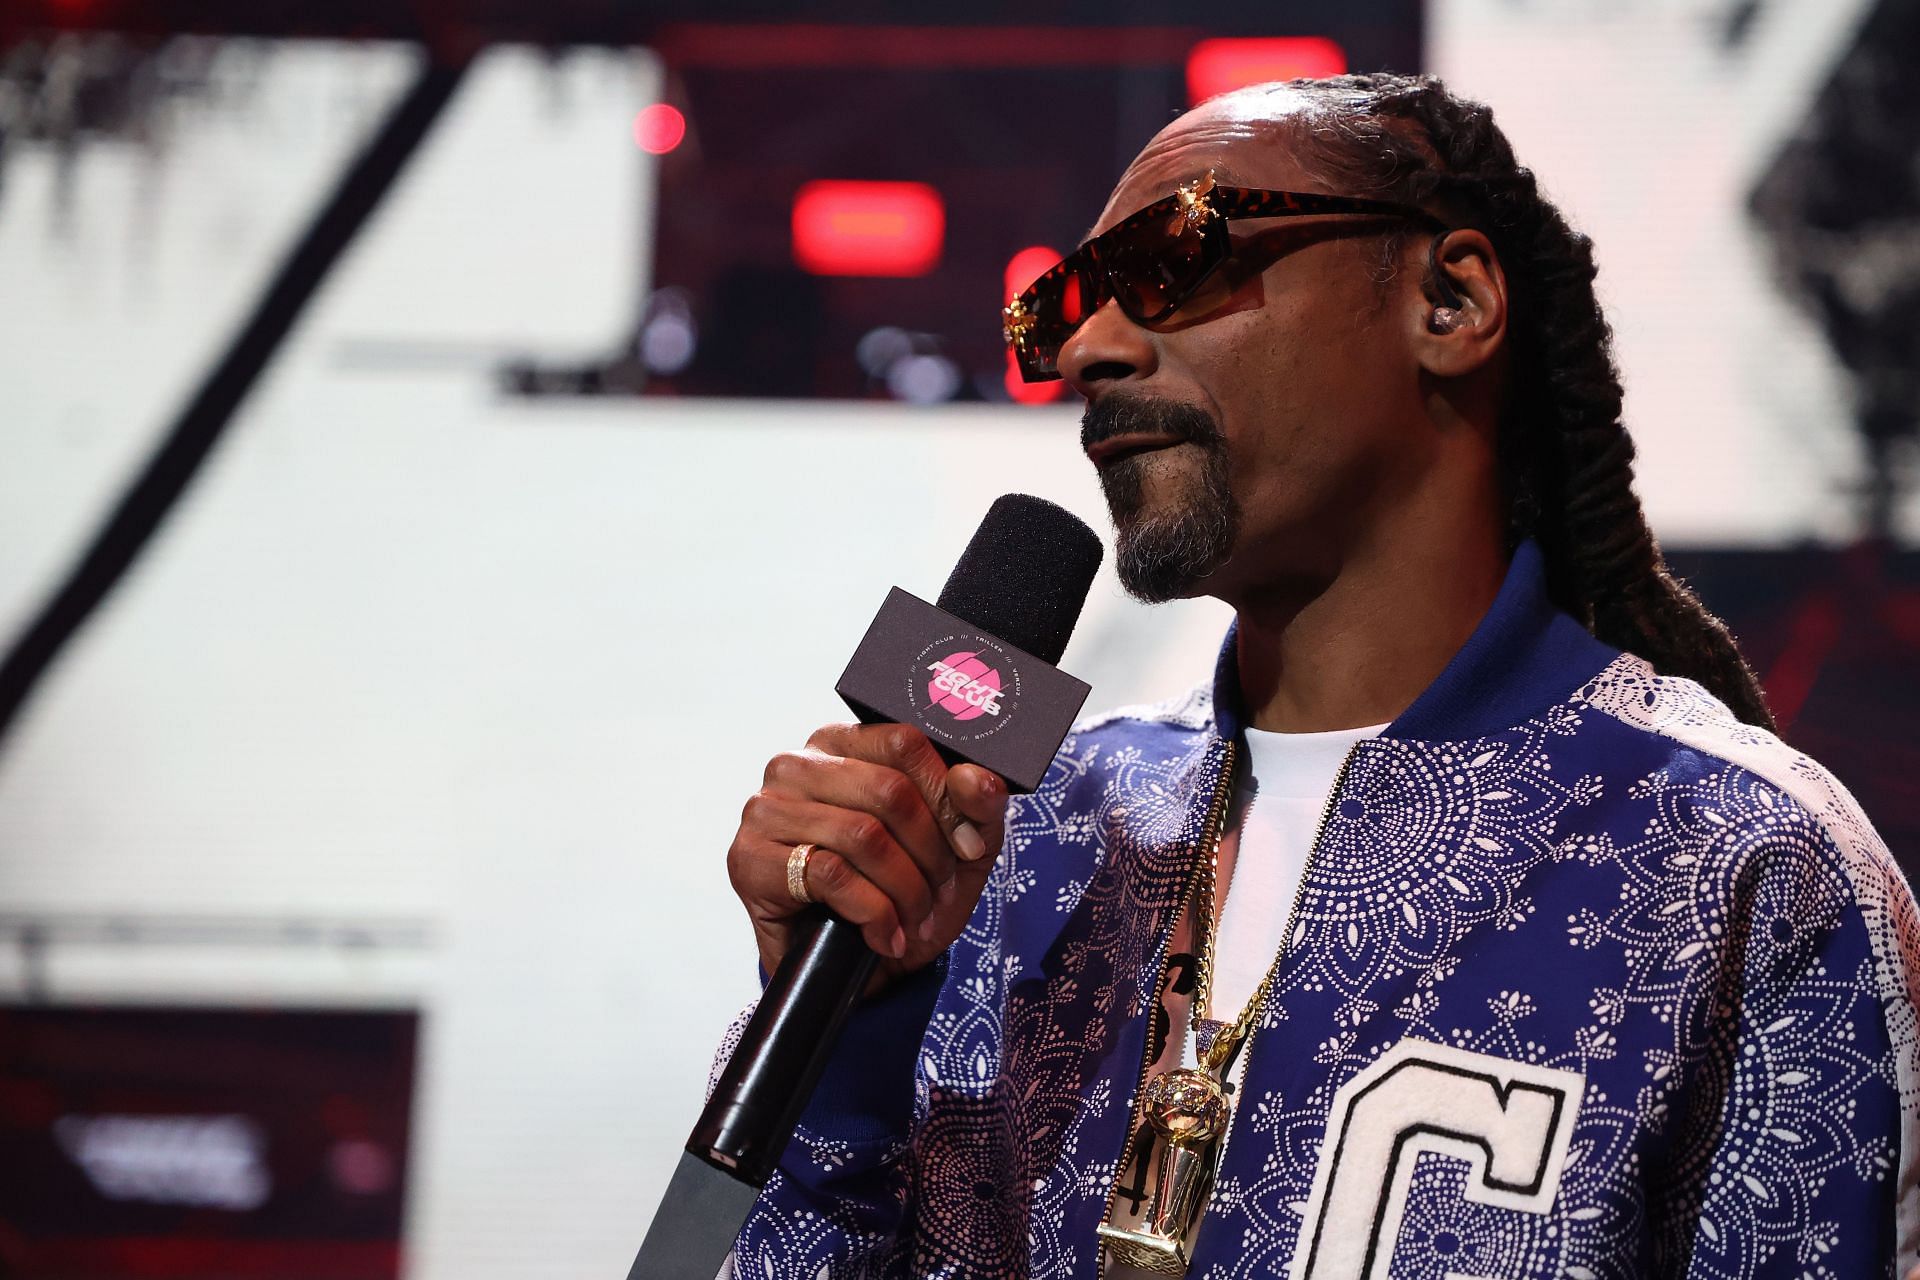 Snoop Dogg has met several celebrities, but he would have had special words for Jordan.